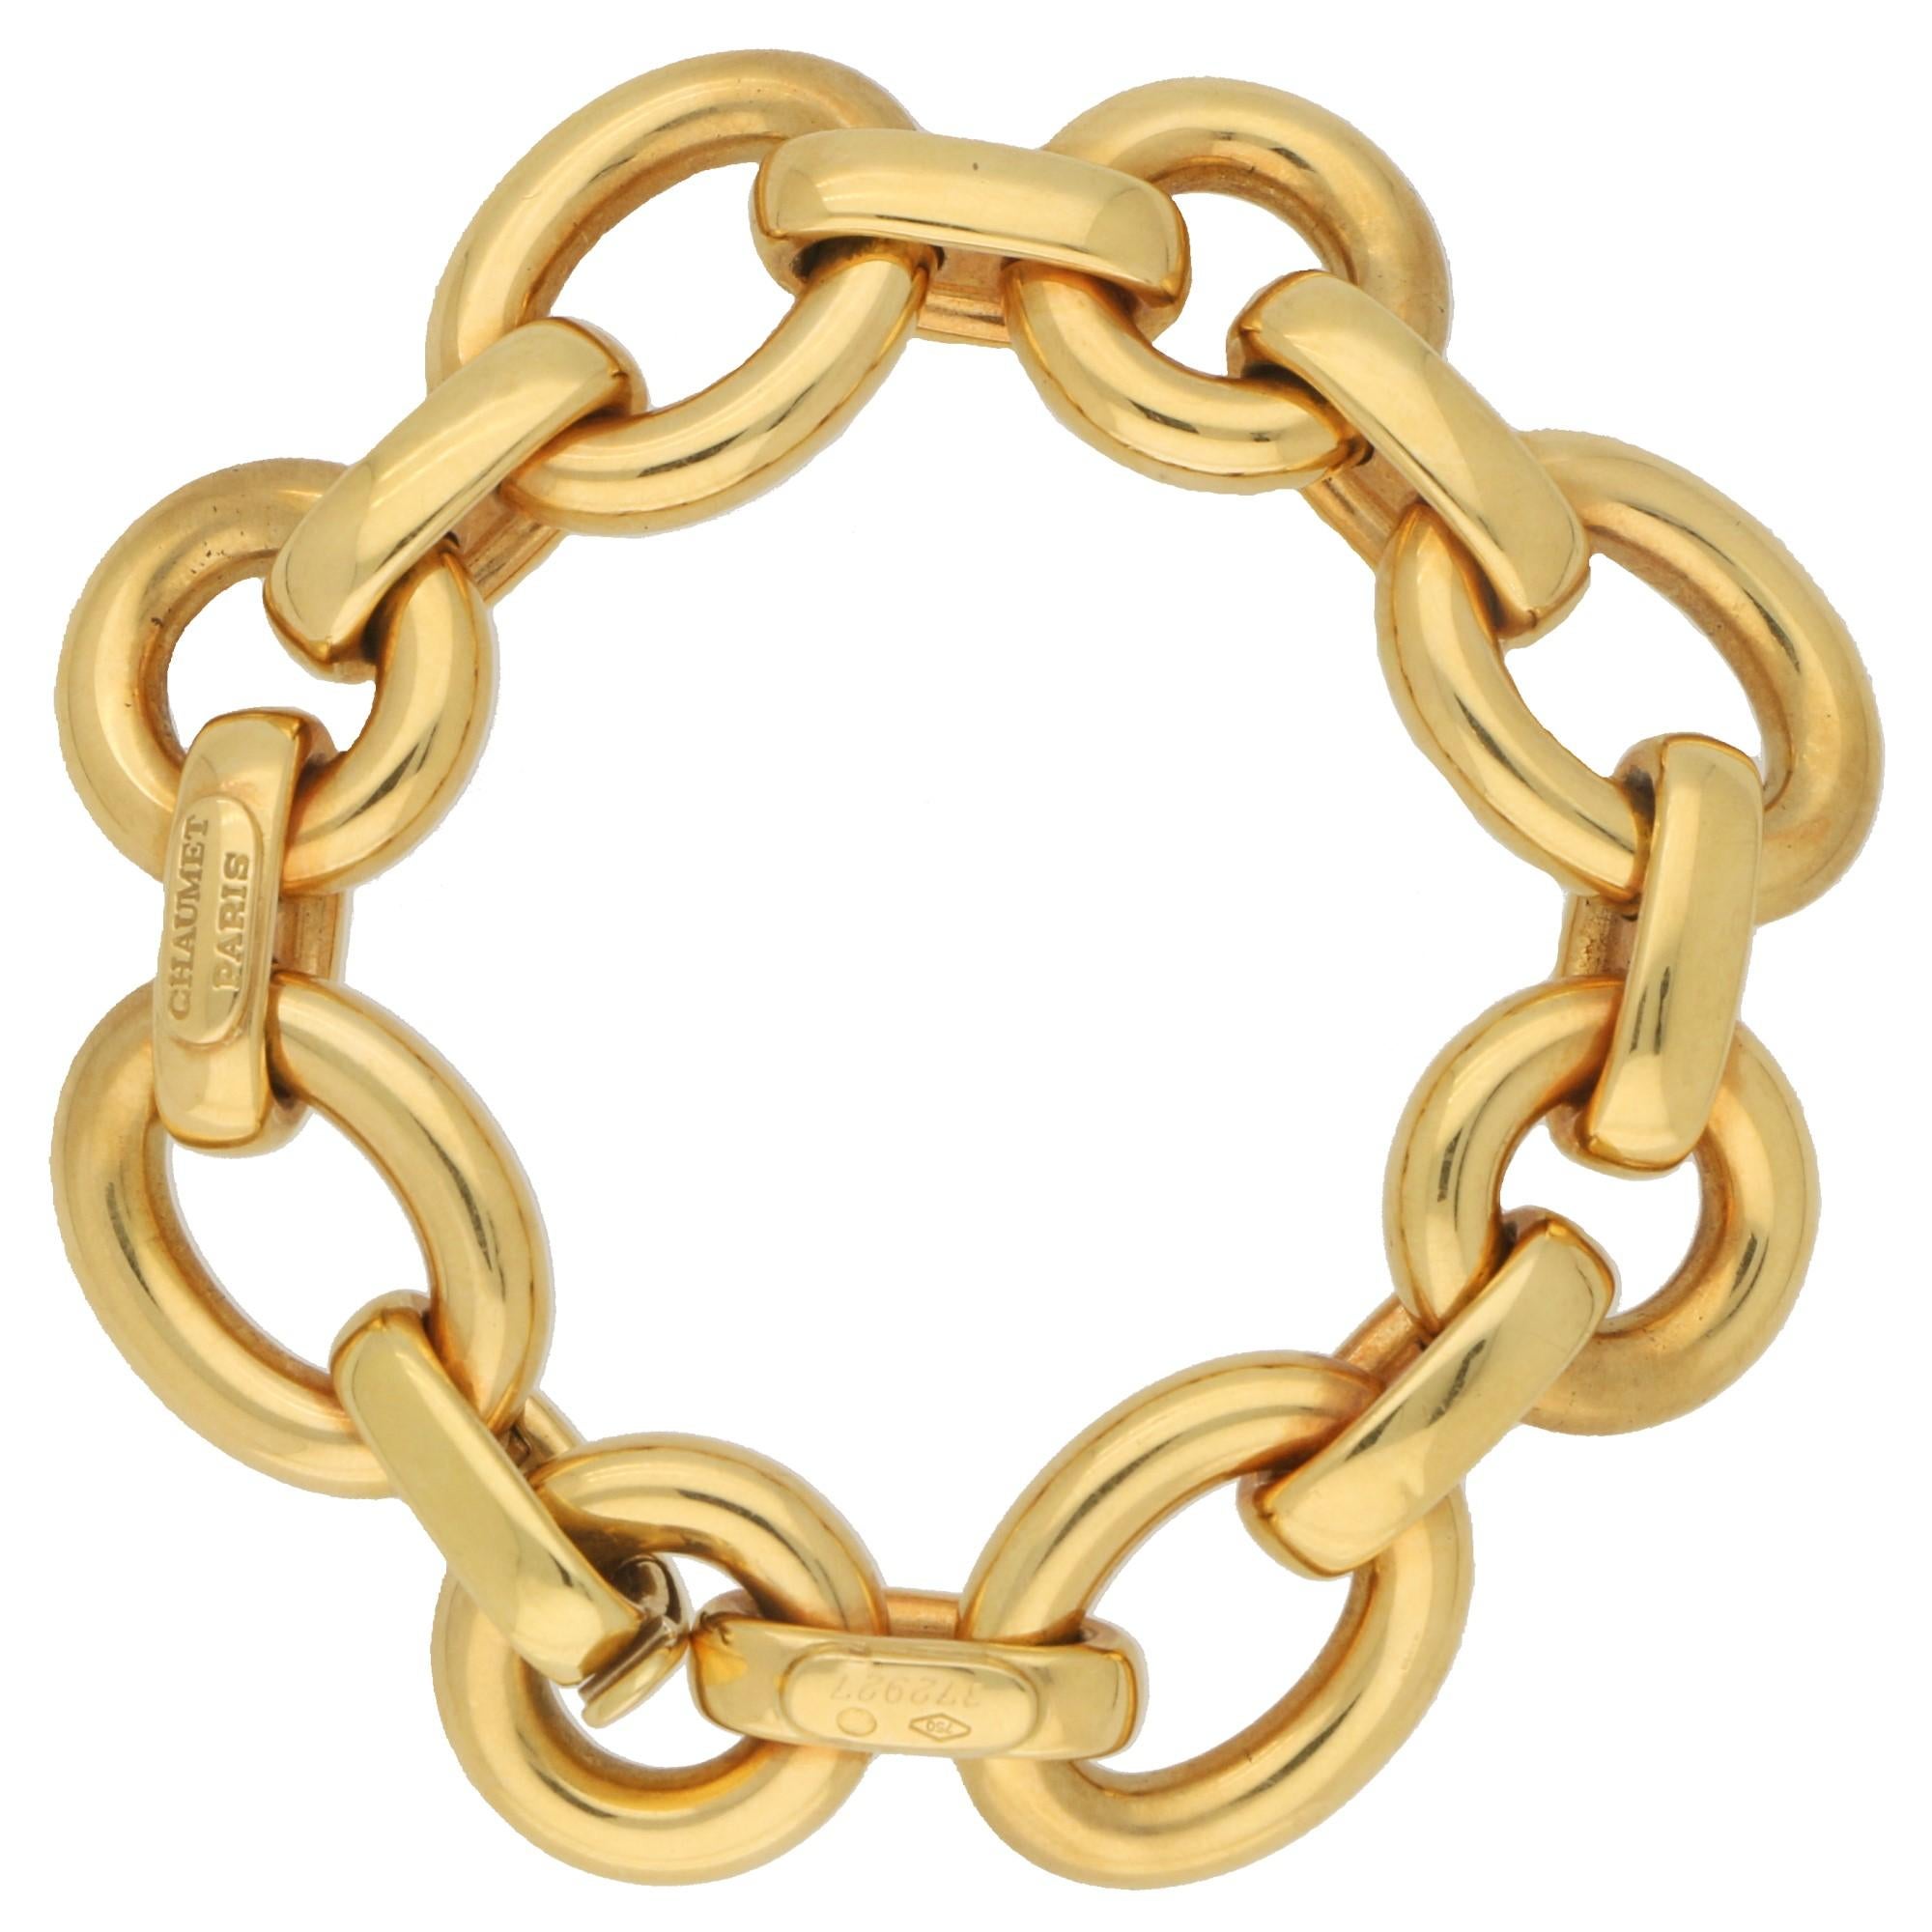 Chaumet Paris Chunky Chain Link Retro Bracelet Set in 18 Karat 